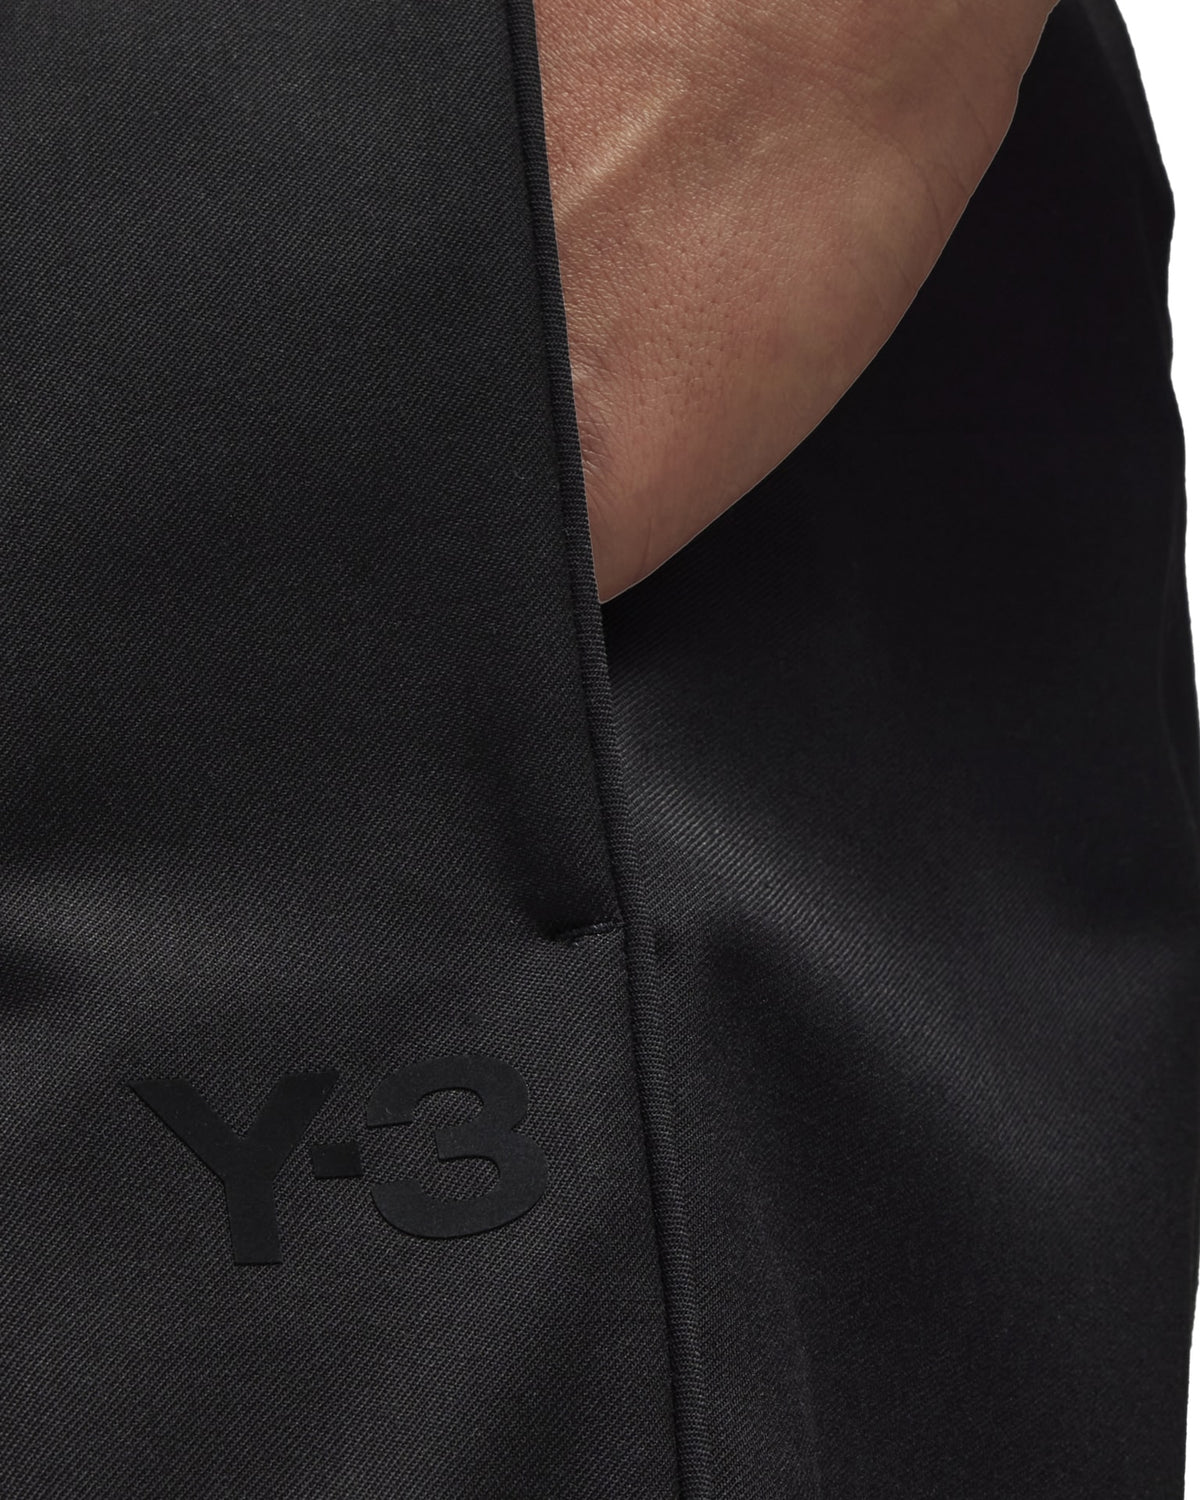 adidas Y-3 | Refined Wool Pants Black - IN8753 - Concrete